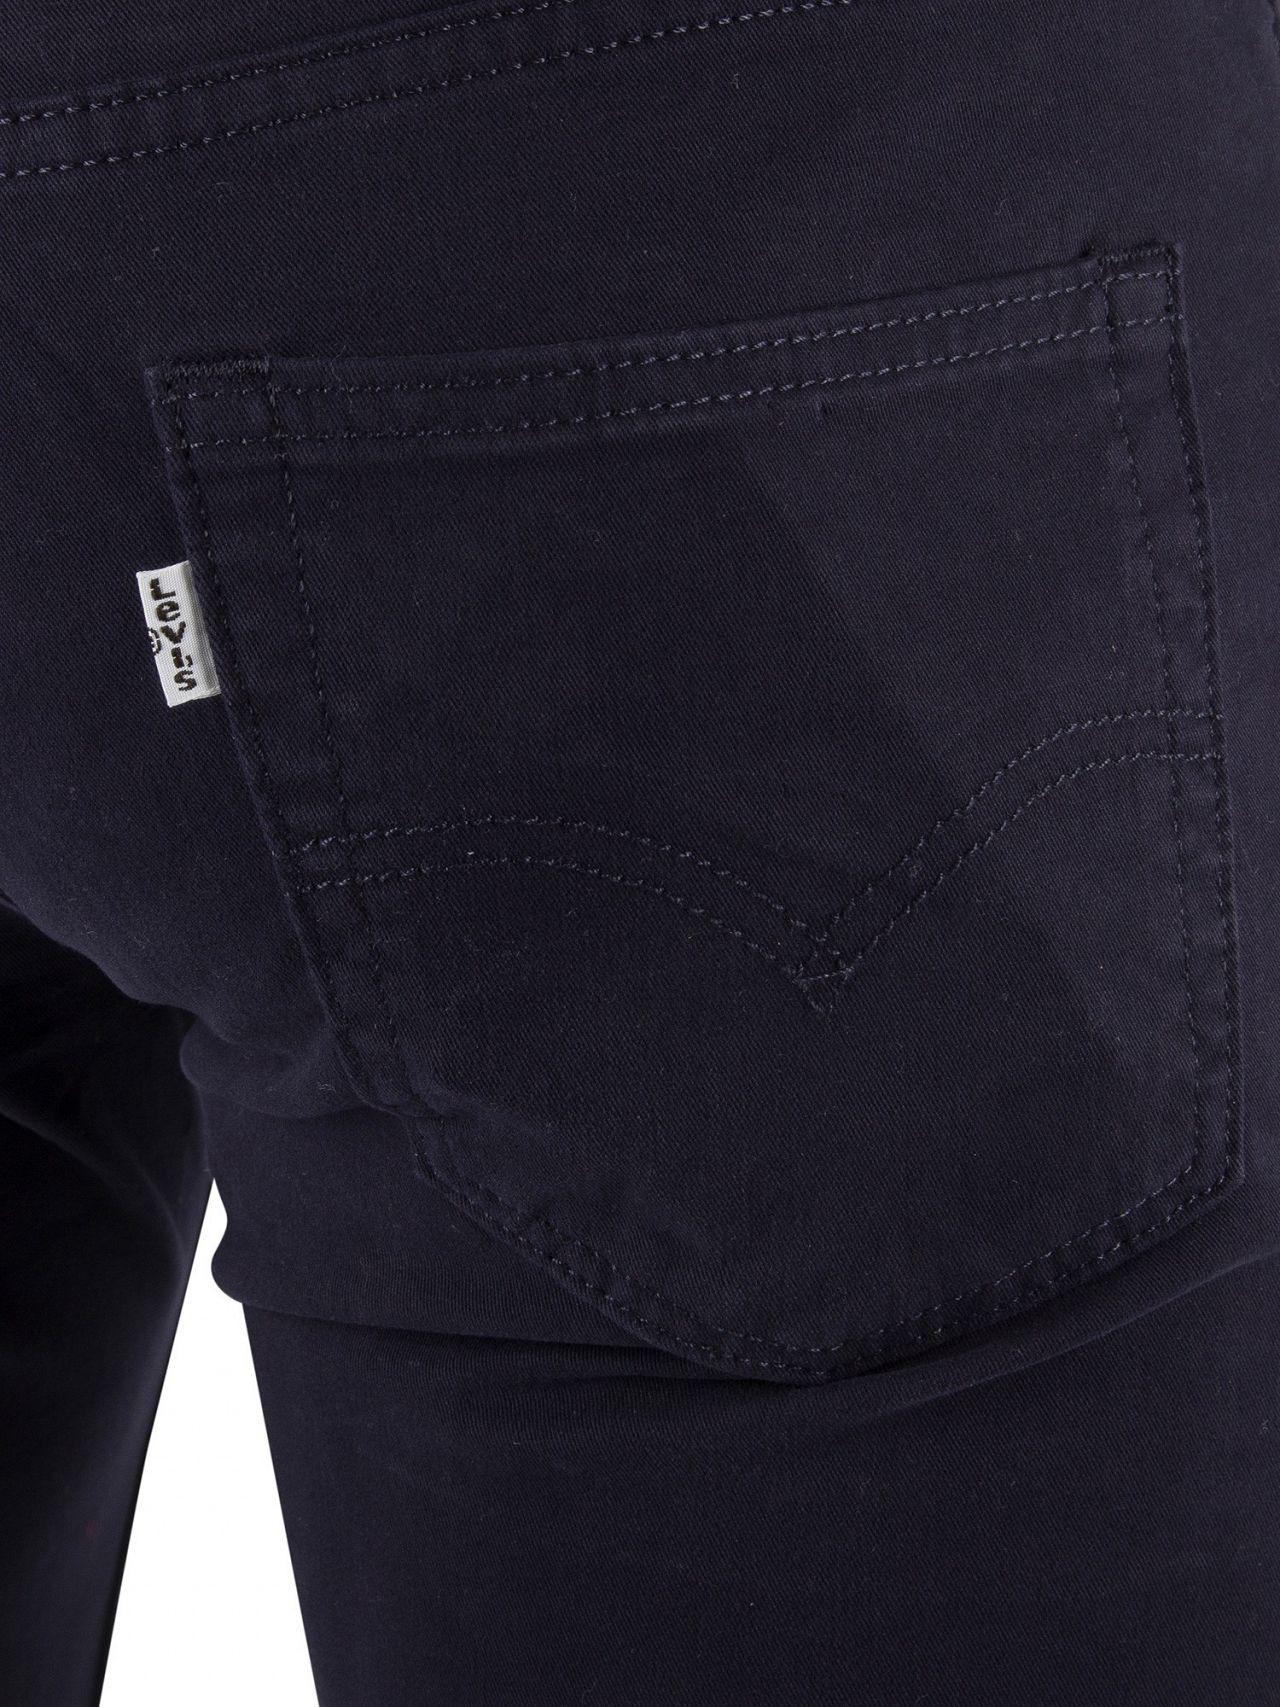 Levi's Denim Nightwatch Blue 511 Slim Fit Jeans for Men - Lyst